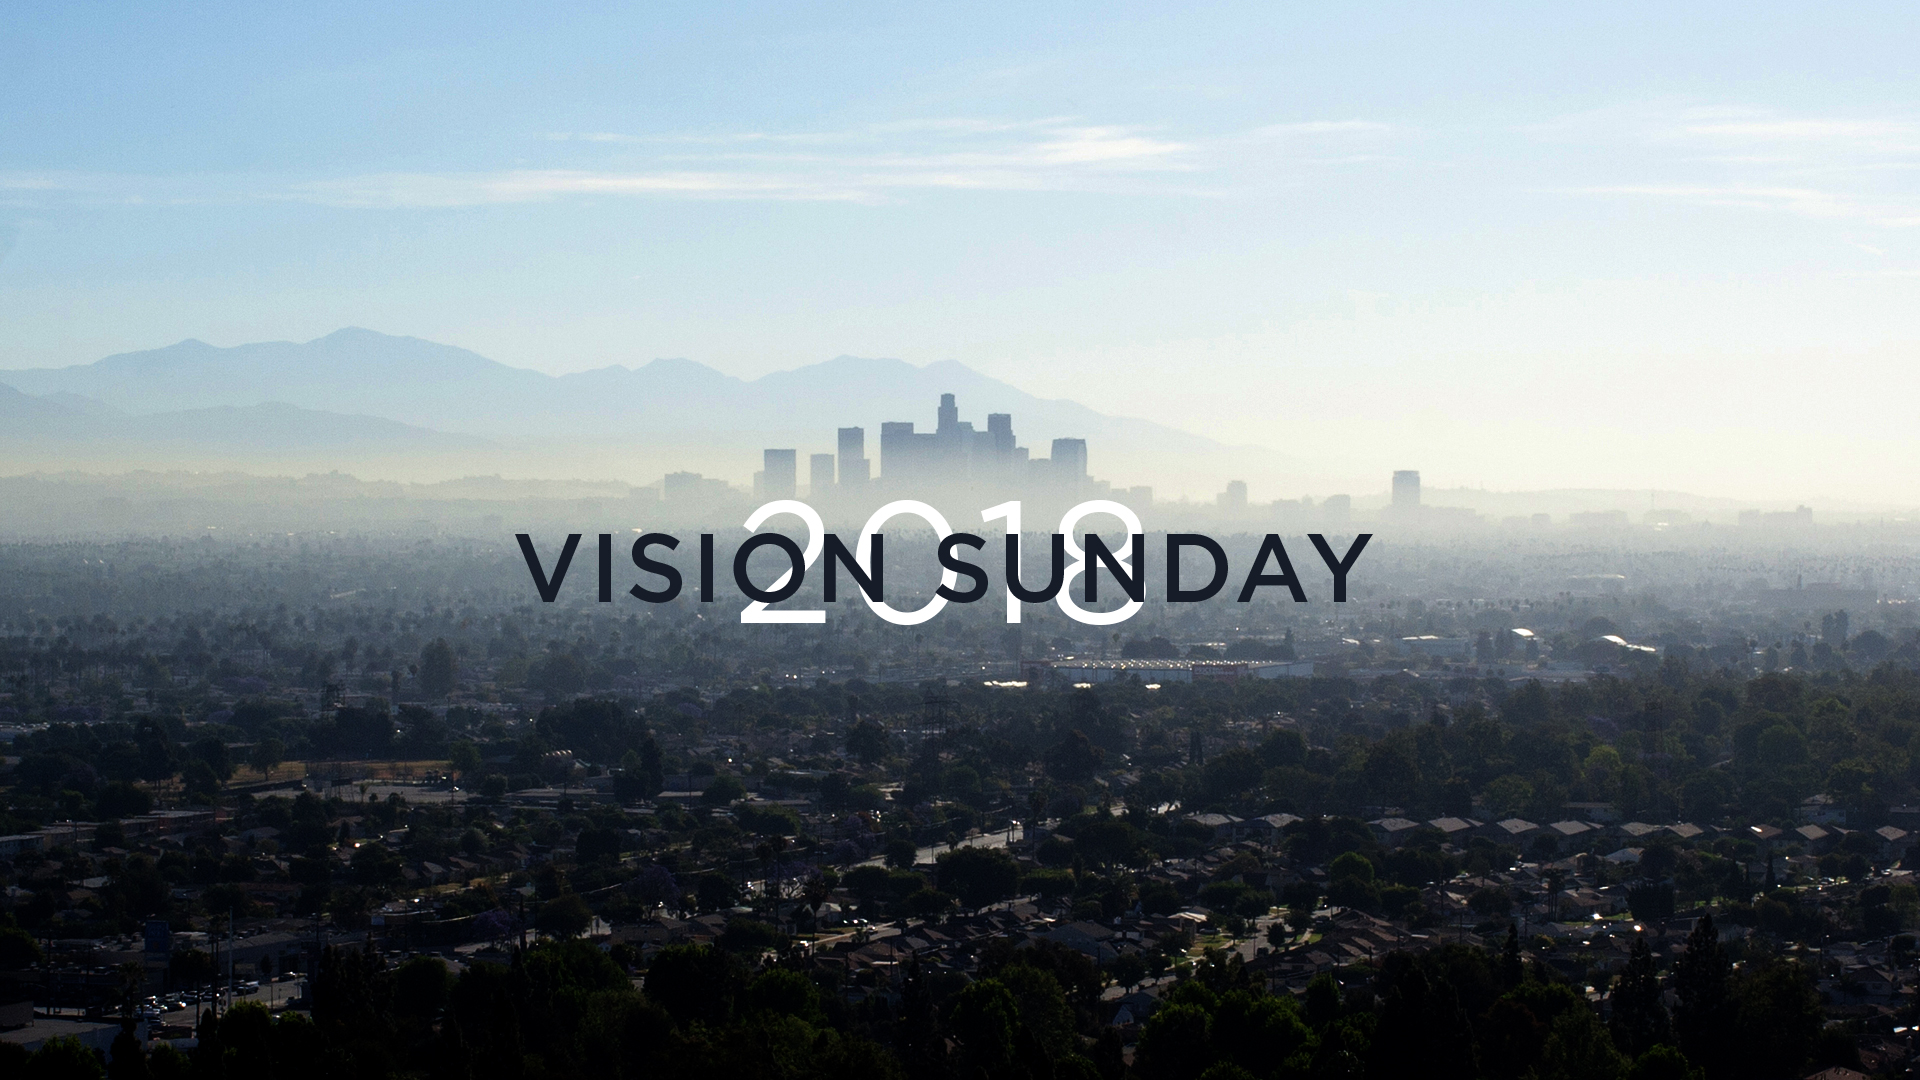 Vision Sunday 2018